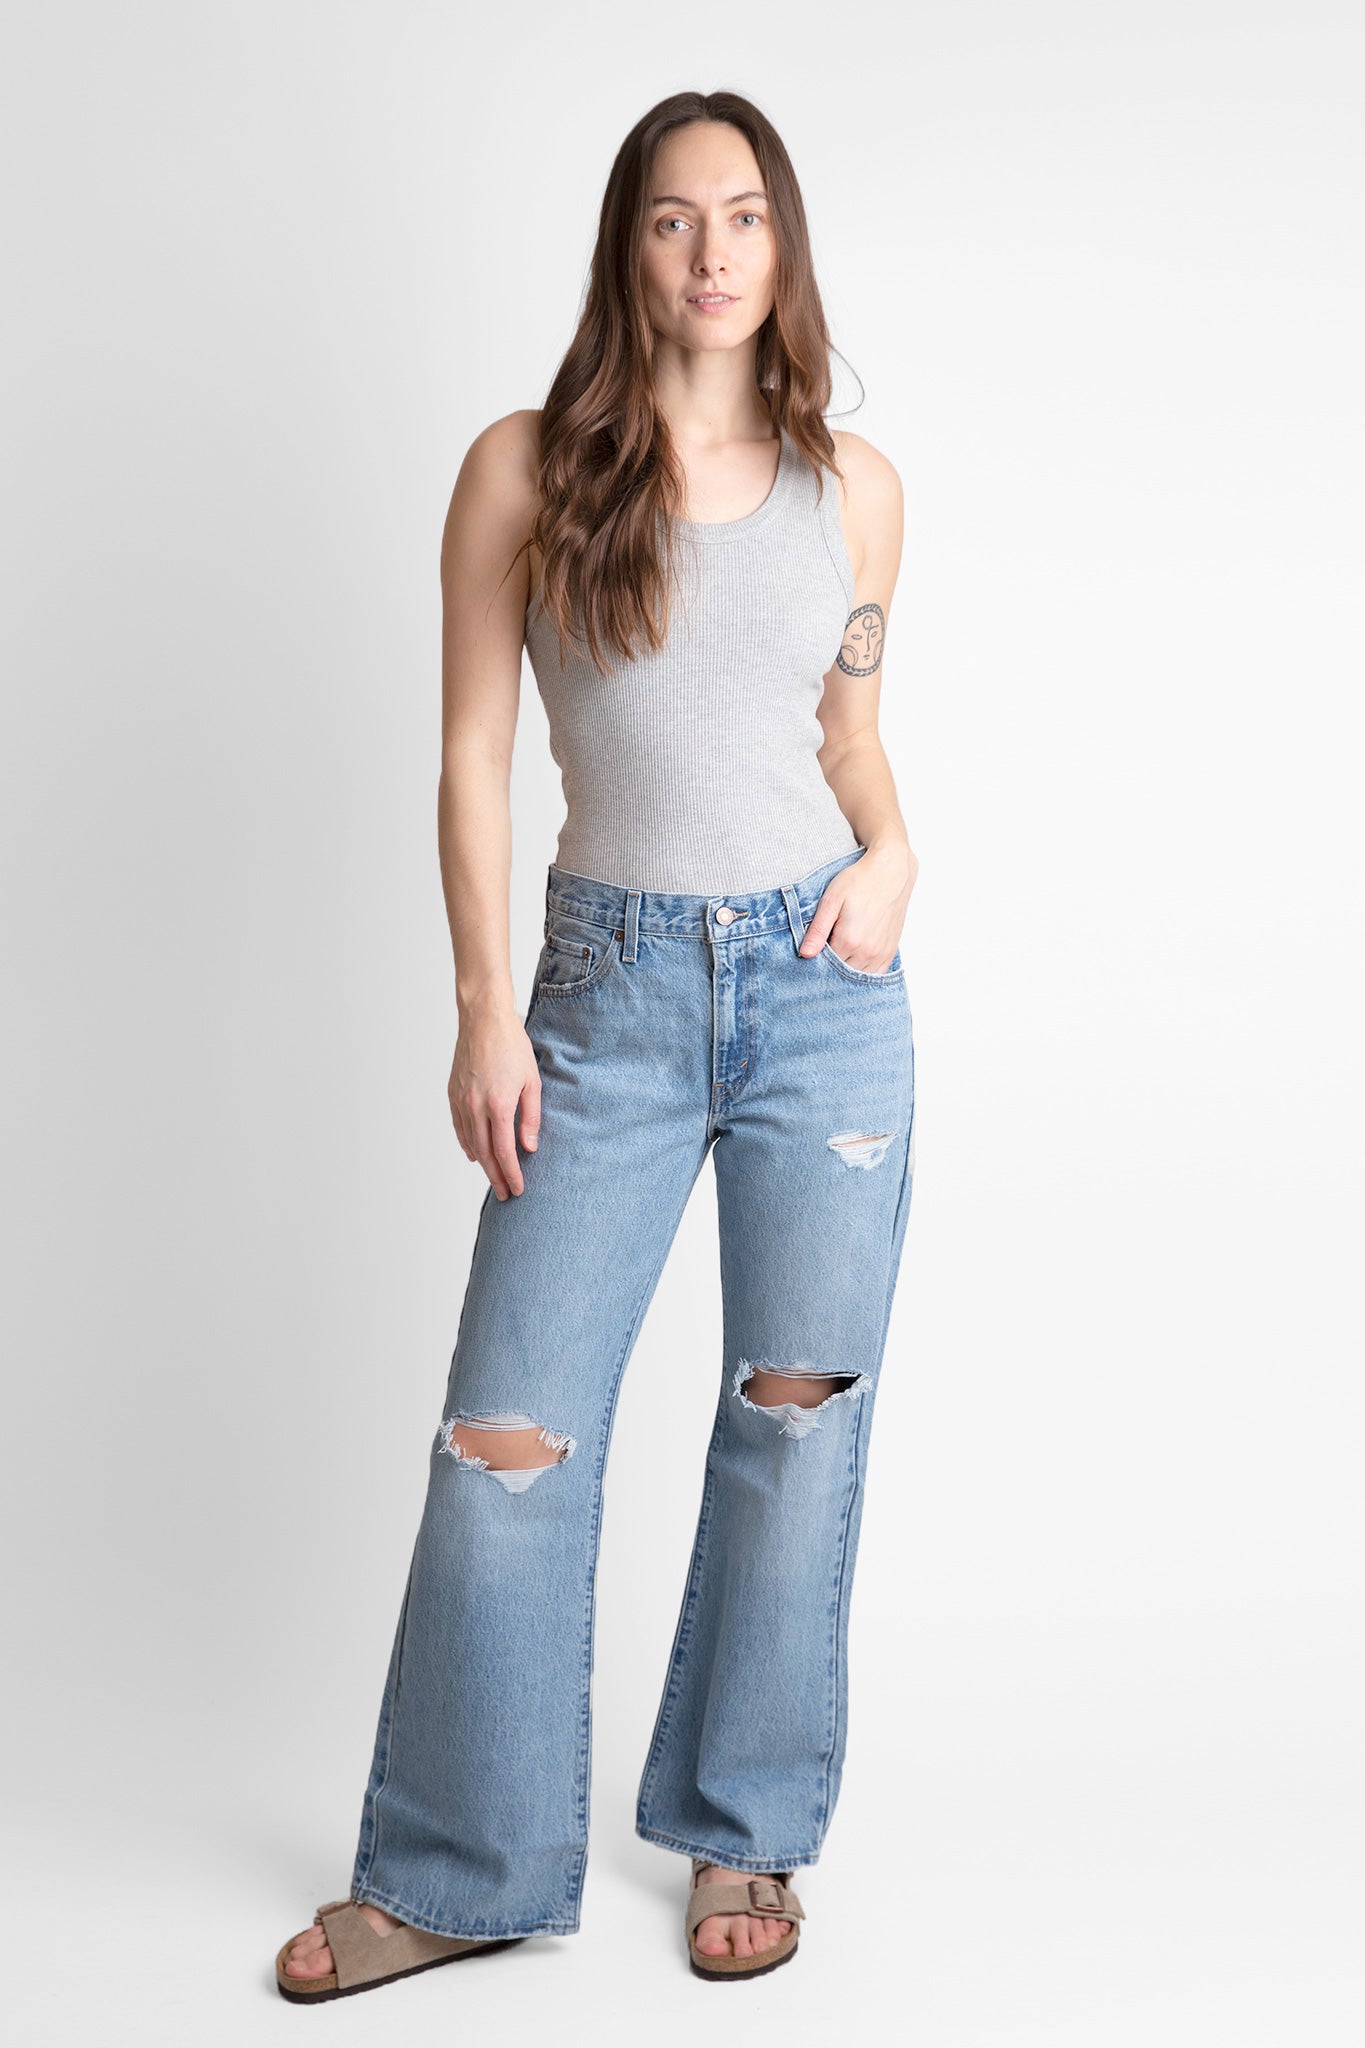 Levis-Baggy-Bootcut-Jeans-Flea-Market-Find